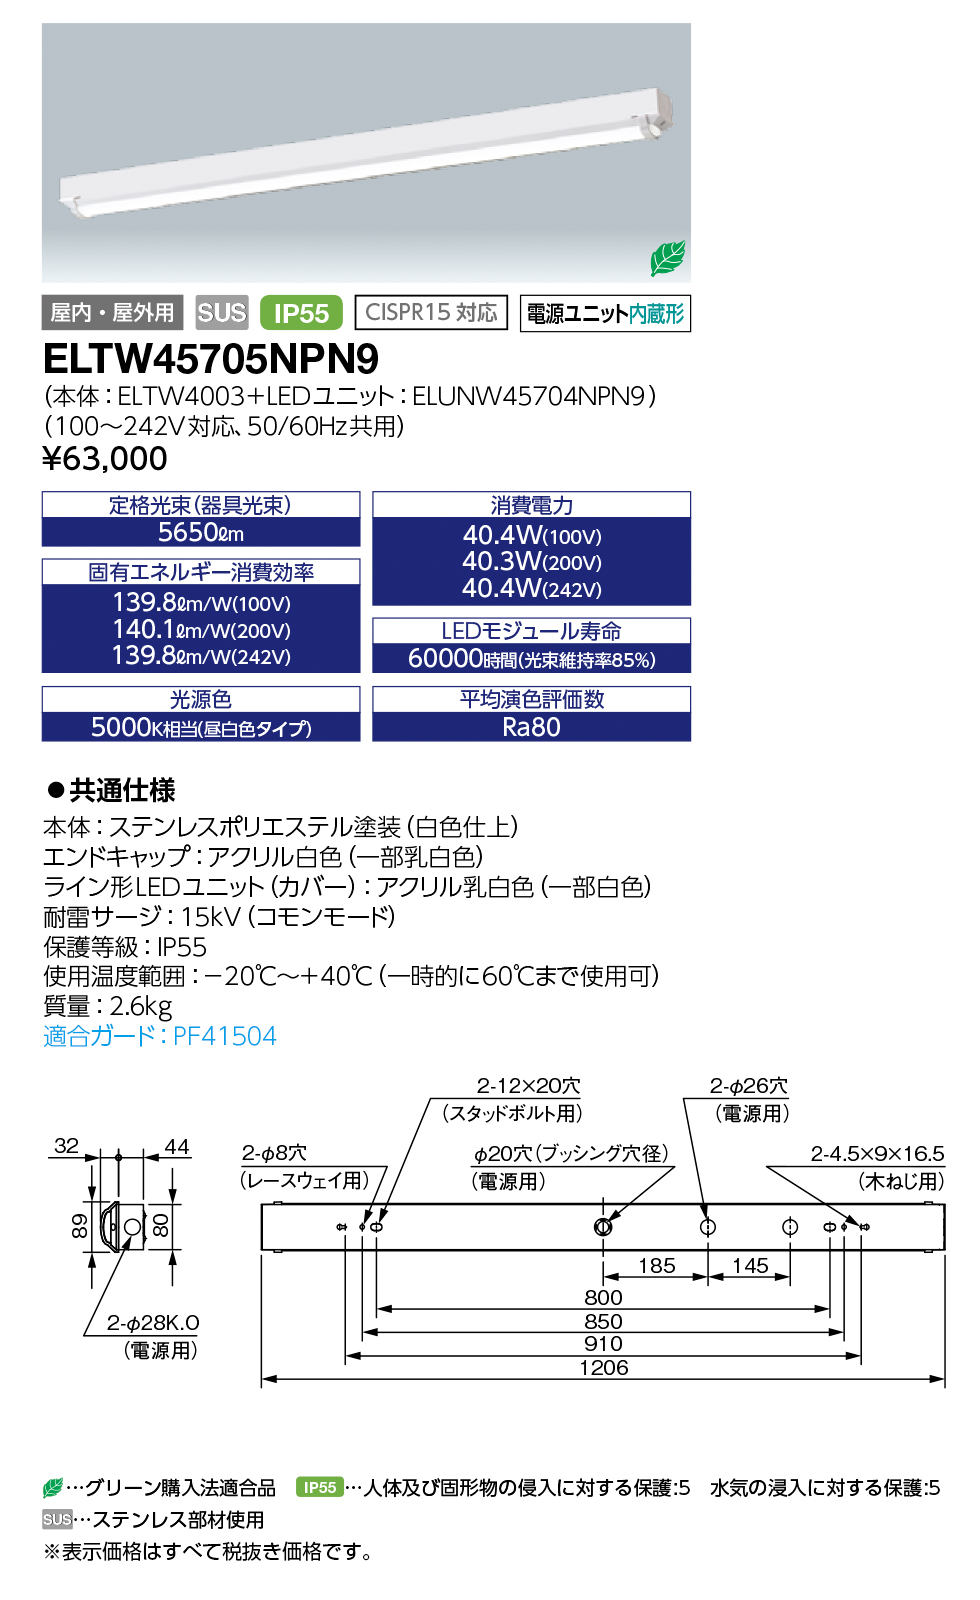 ELTW45705NPN9